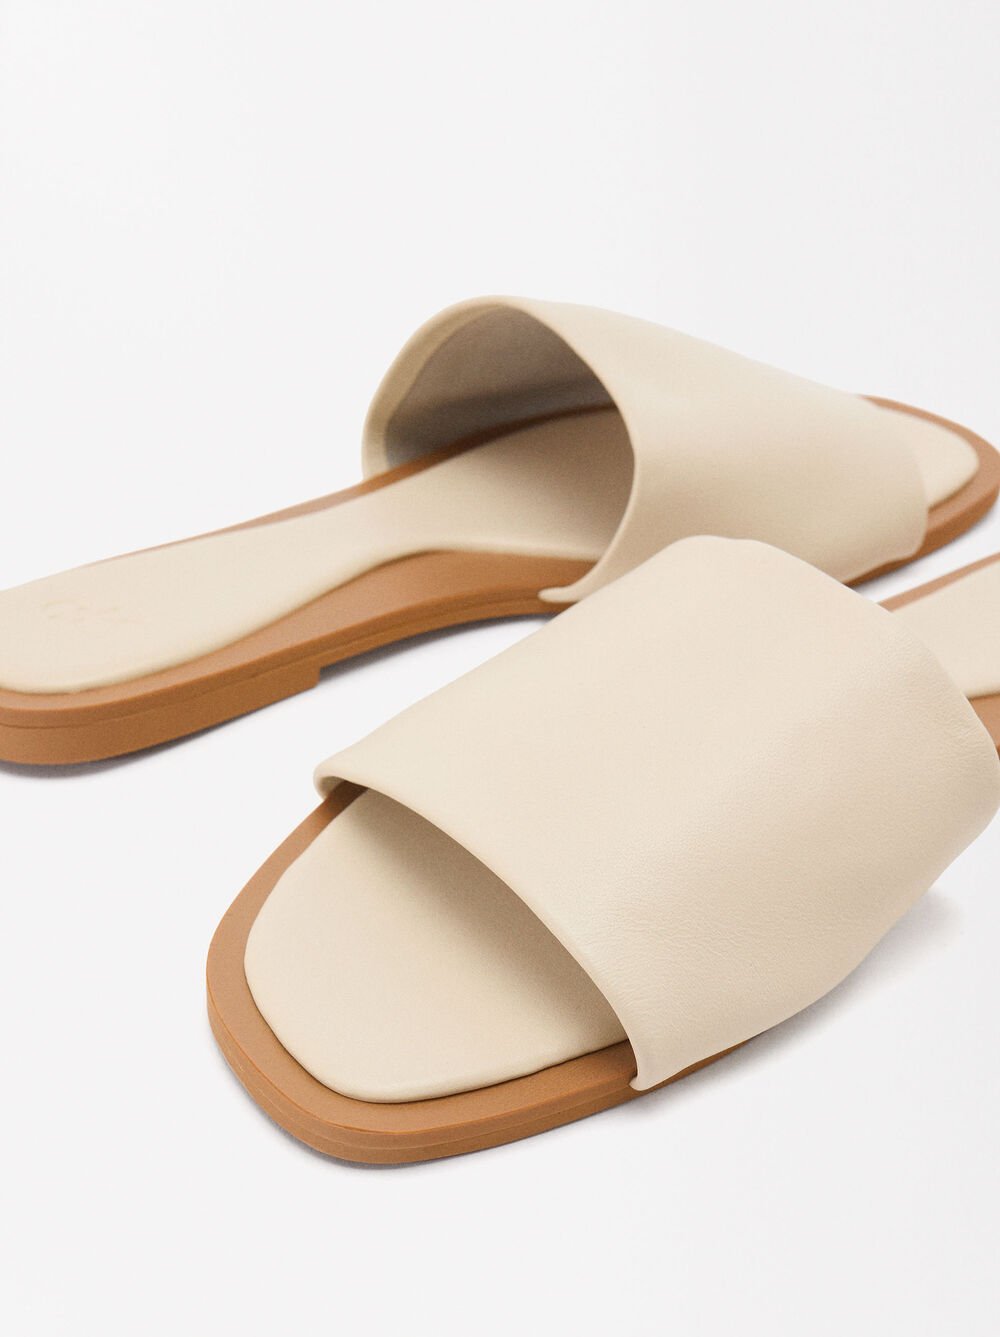 Napa Leather Sandals